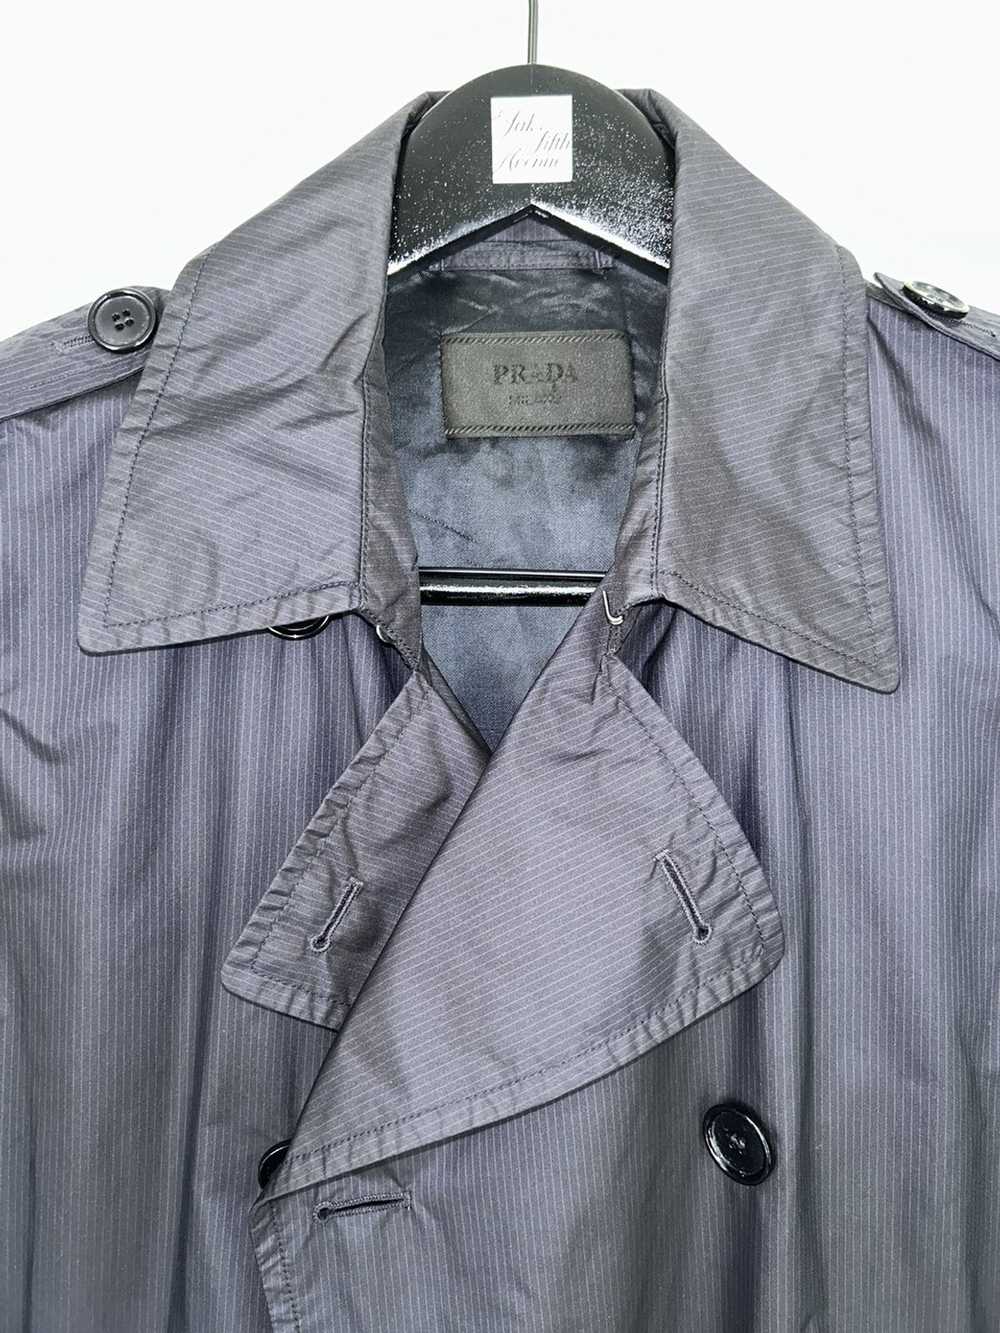 Prada Prada Raincoat Jacket - image 3